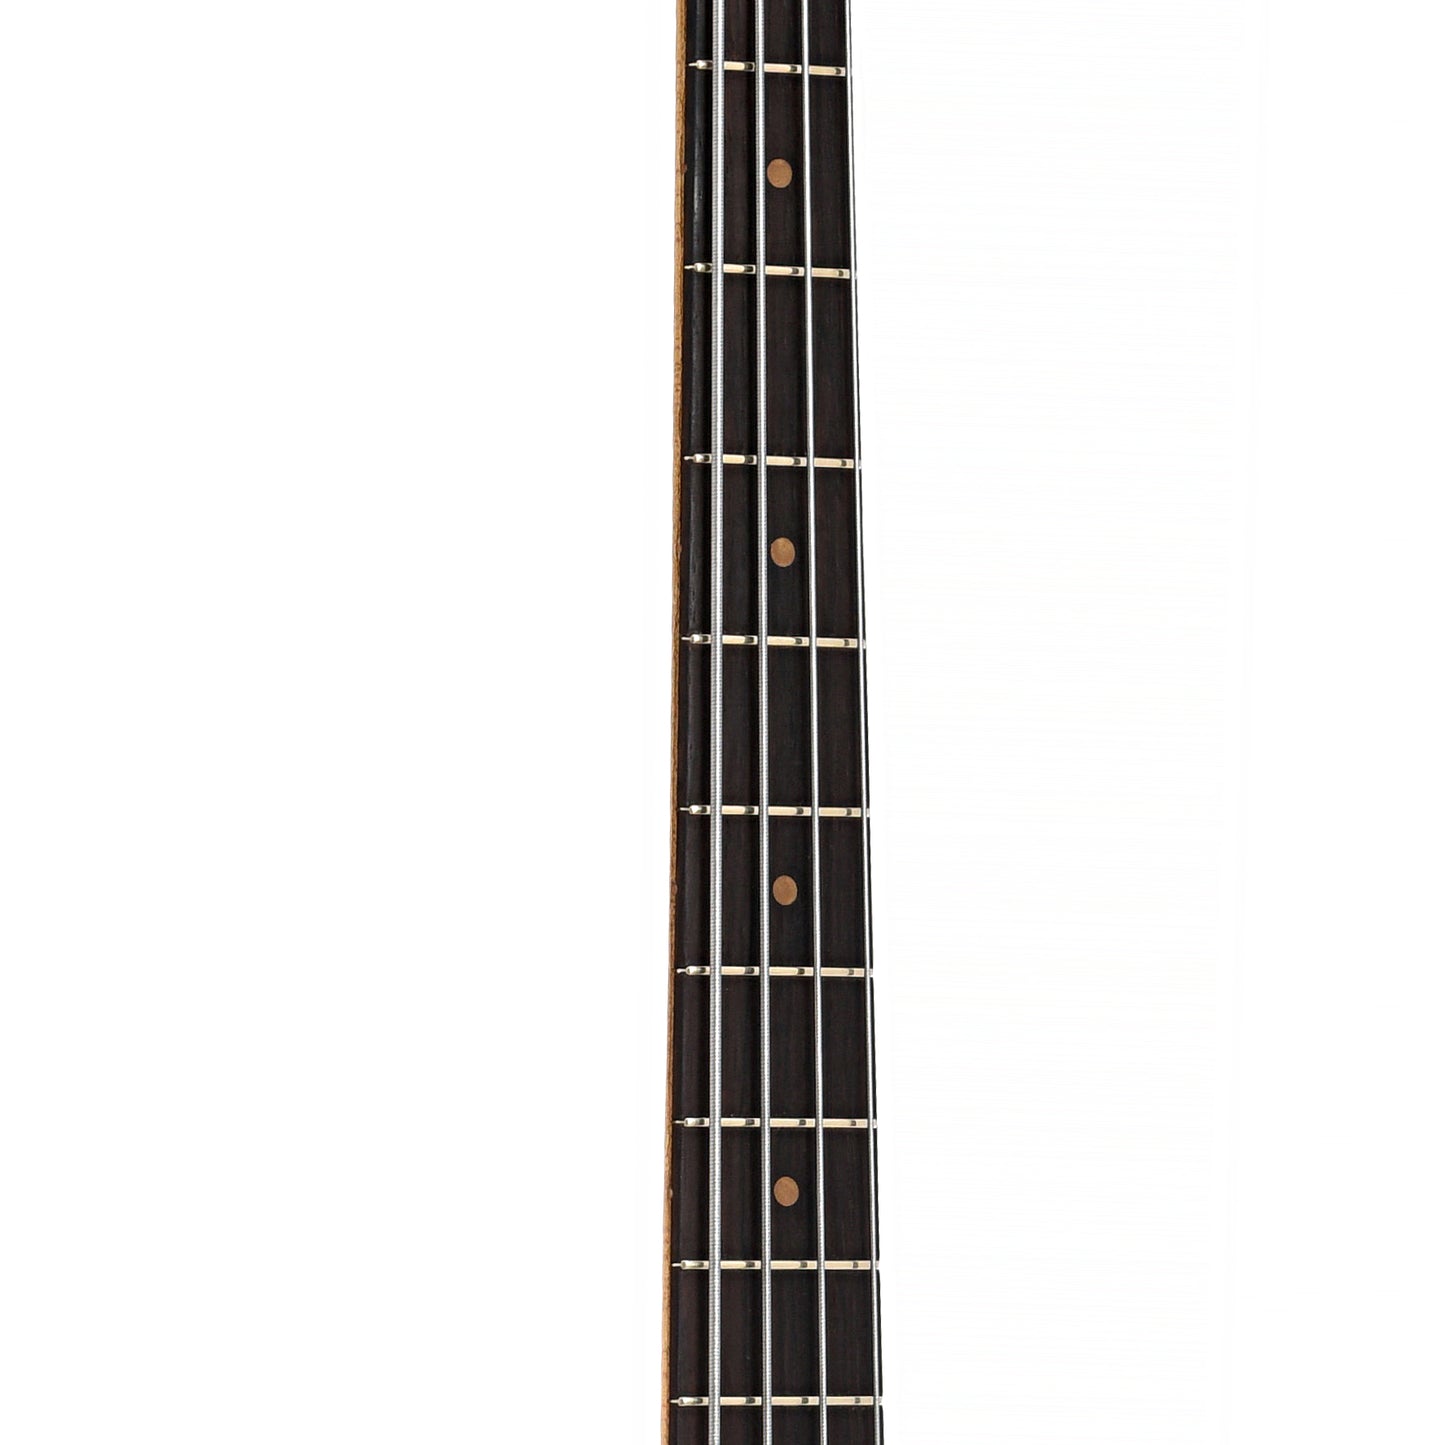 Fretboard of Fender Jazz Bass 